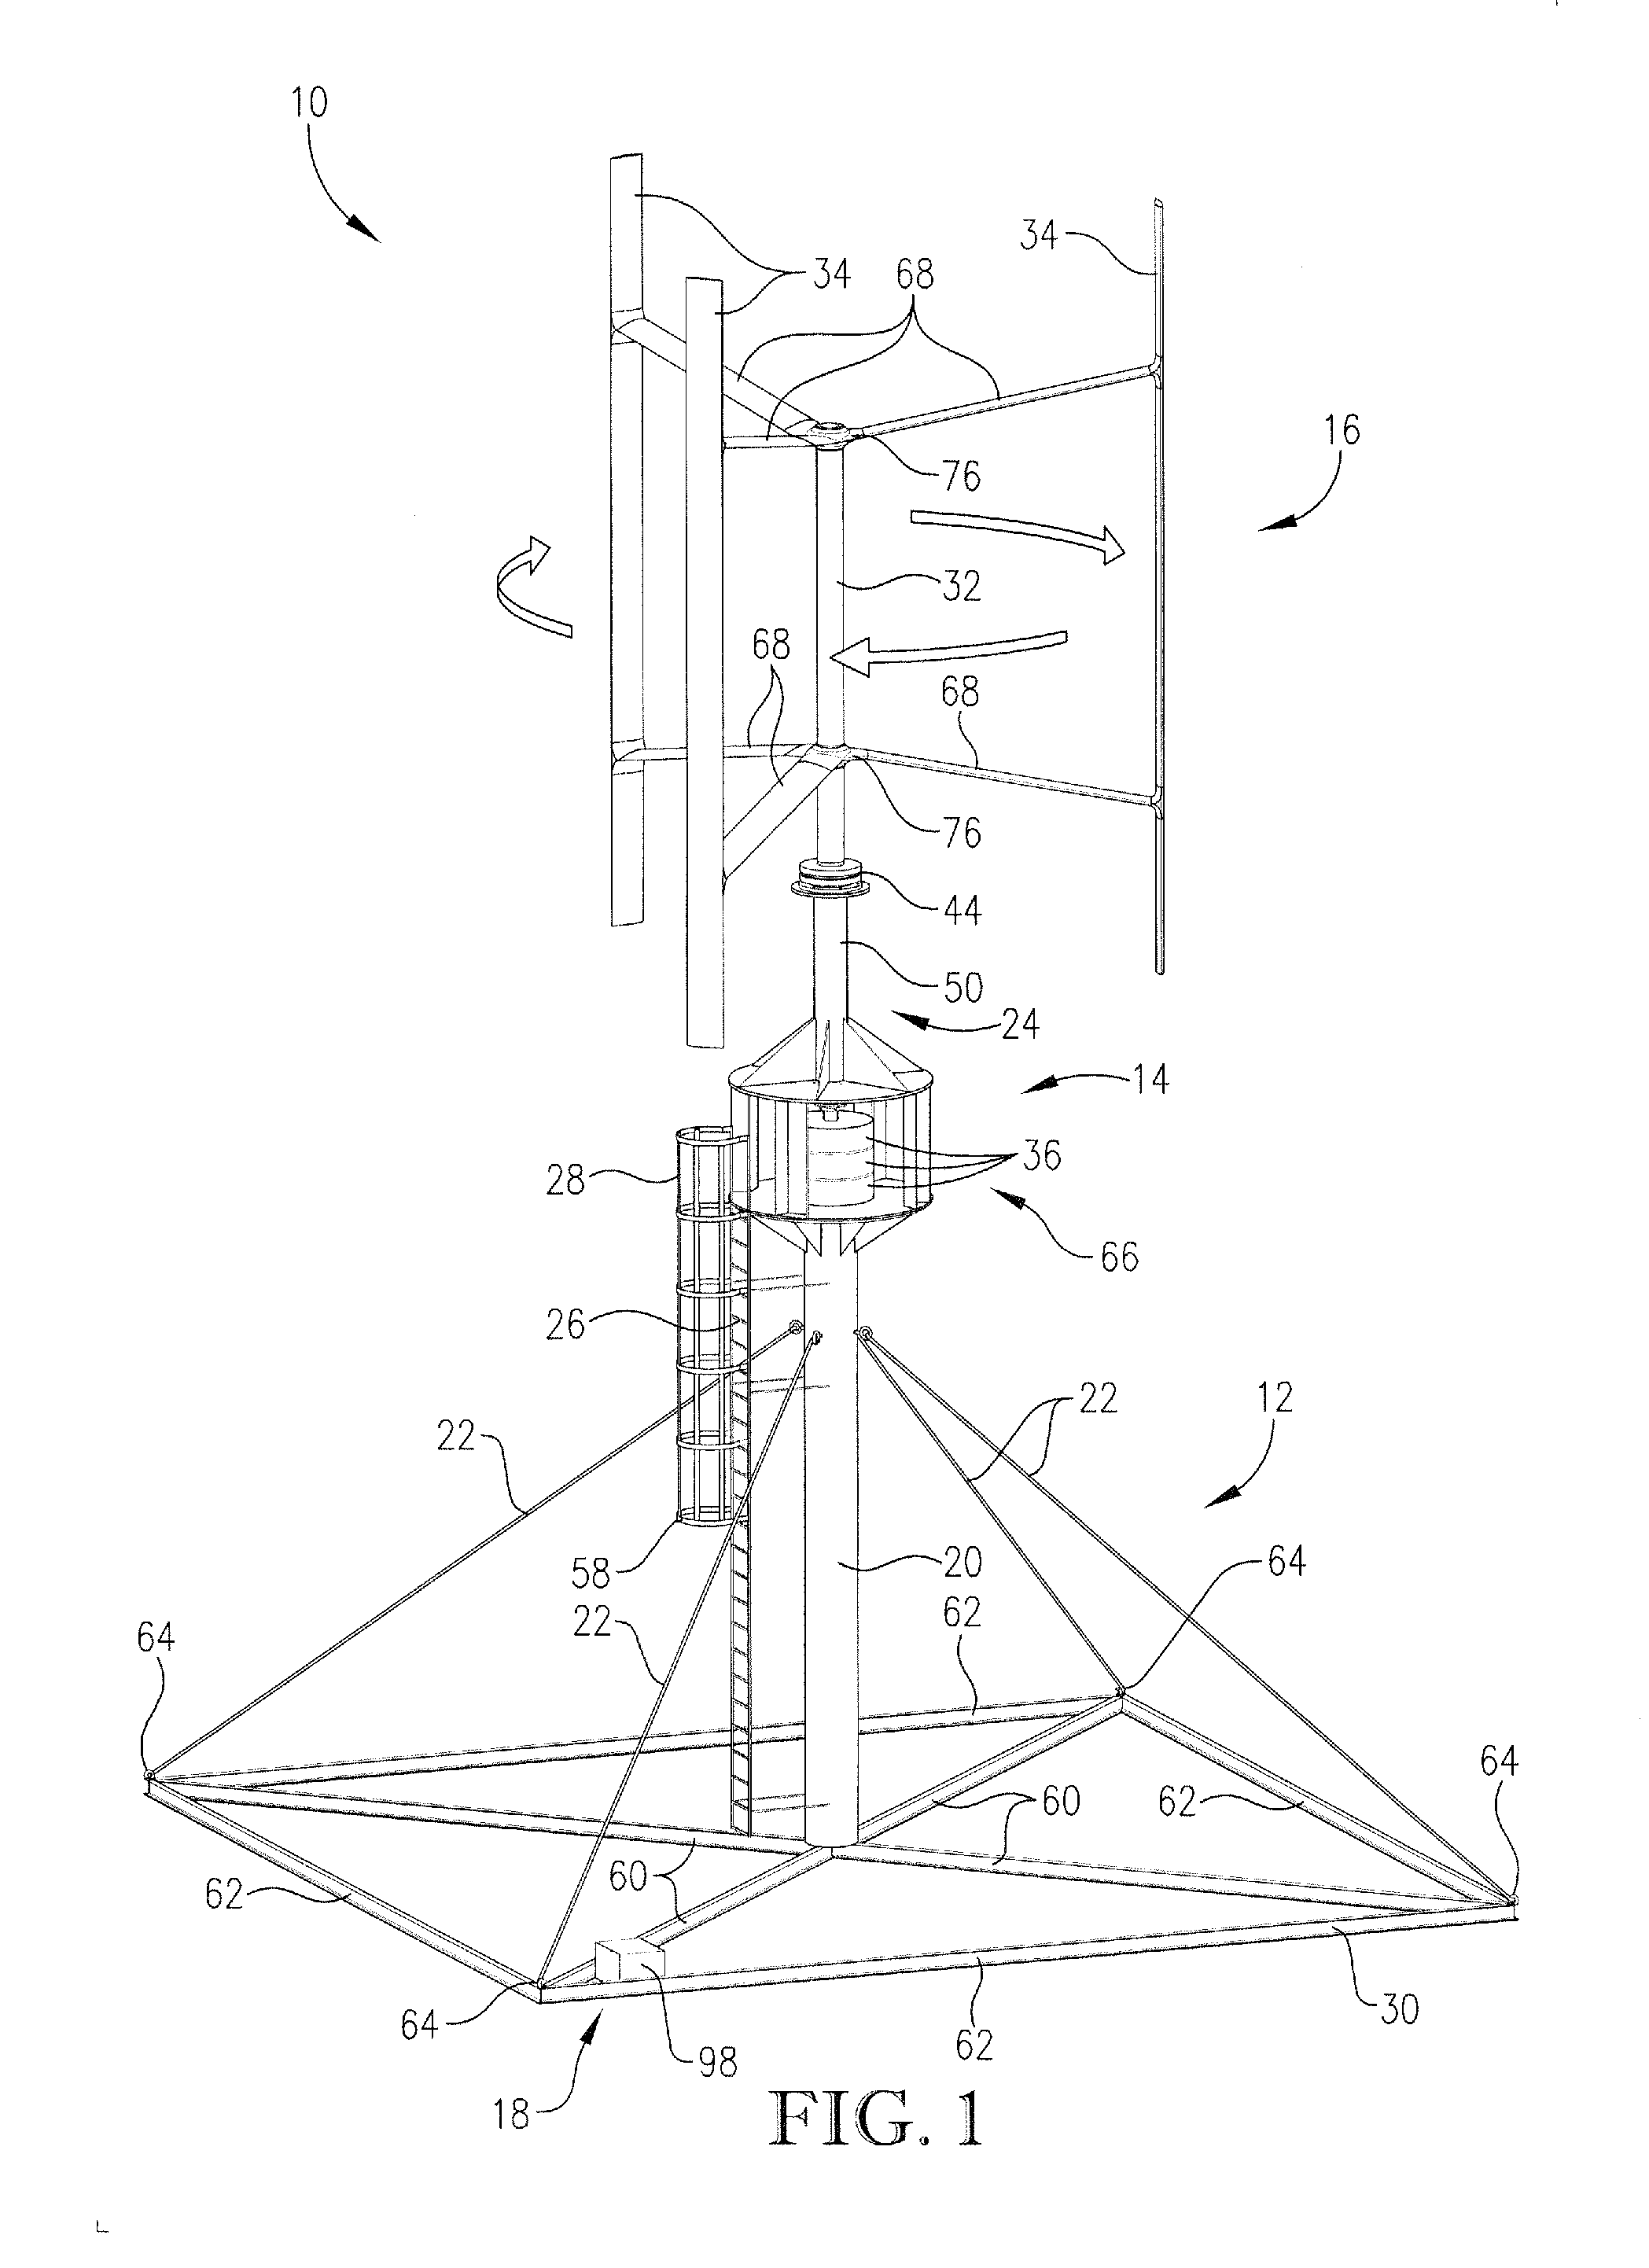 Vertical axis wind turbine